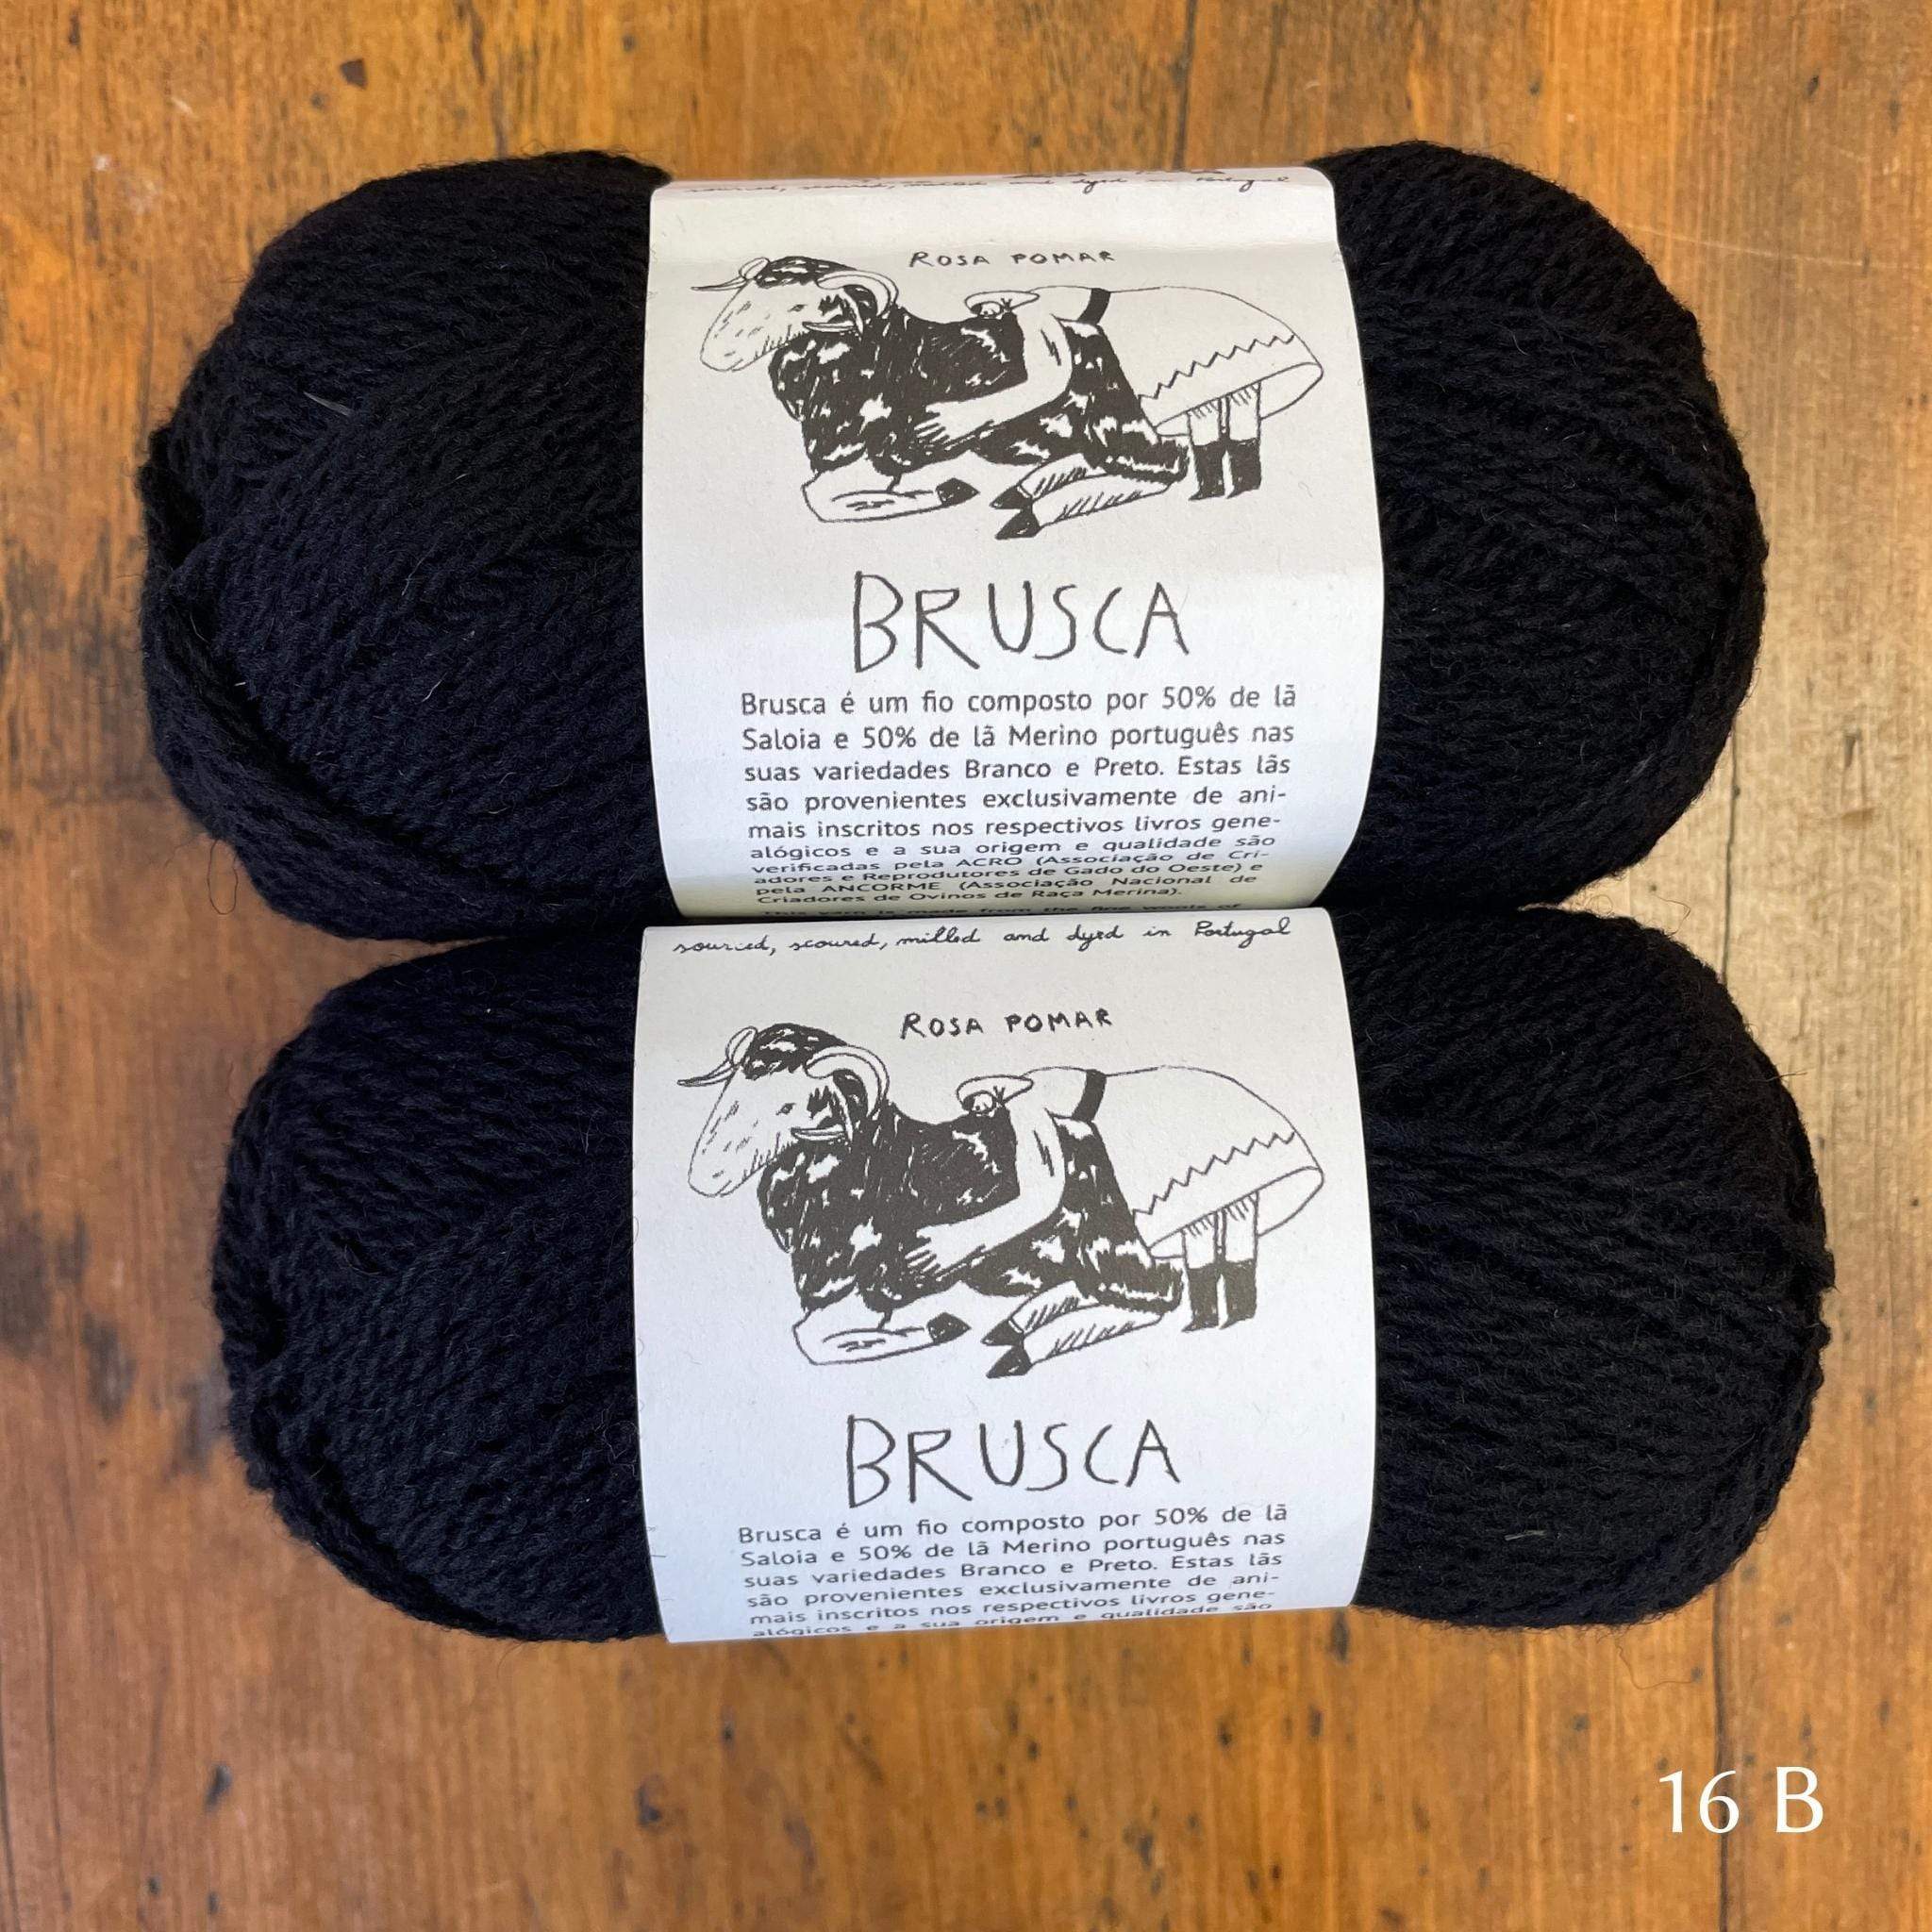 The Woolly Thistle Retrosaria Brusca DK Yarn in 16 B (Black)